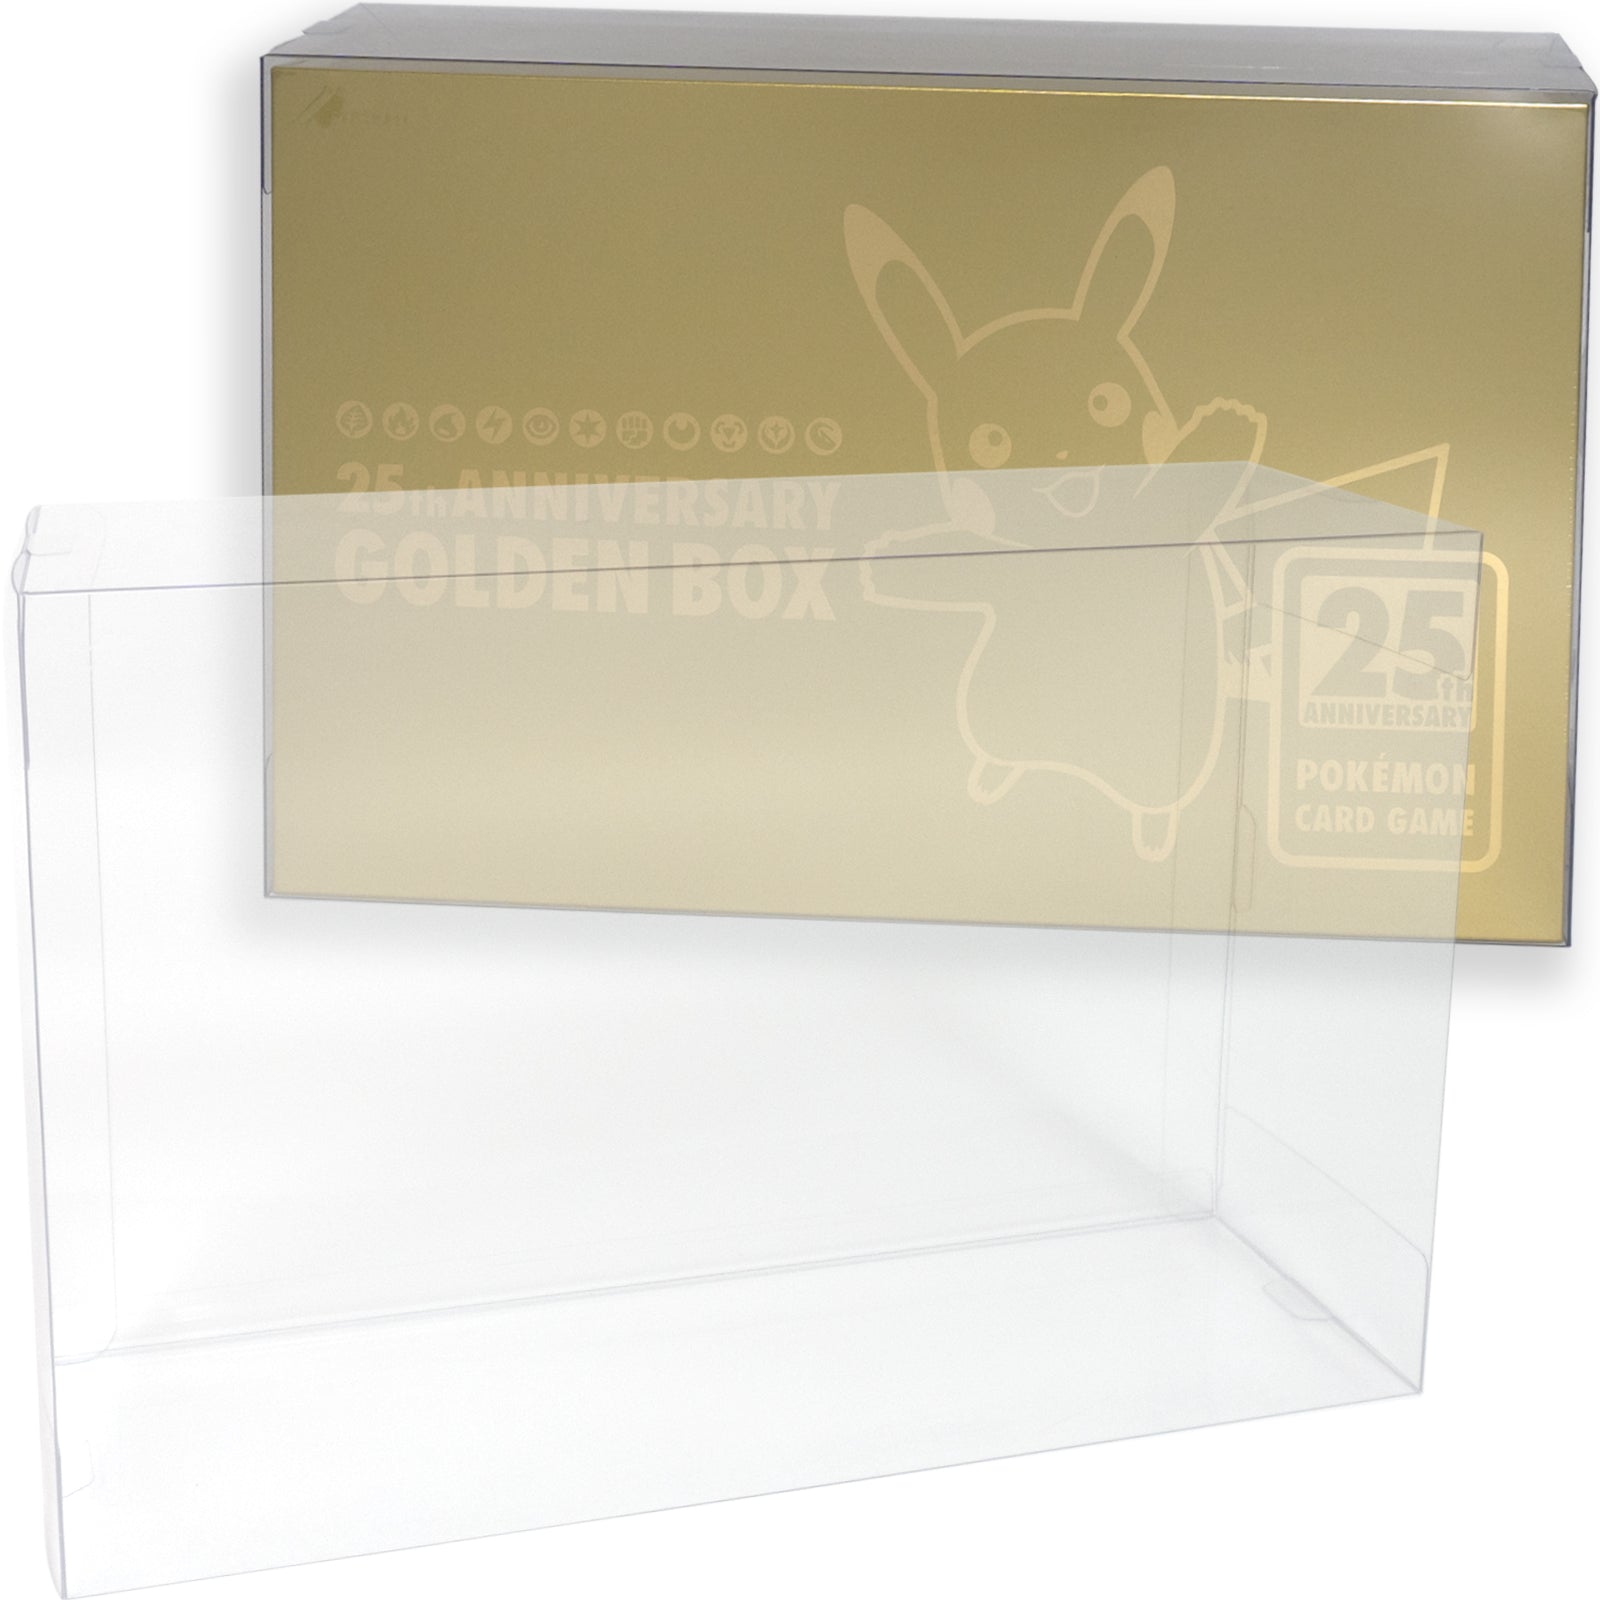 Boxx Guardian ポケモンカードBOX用 25th ANNIVERSARY GOLDEN BOX ...